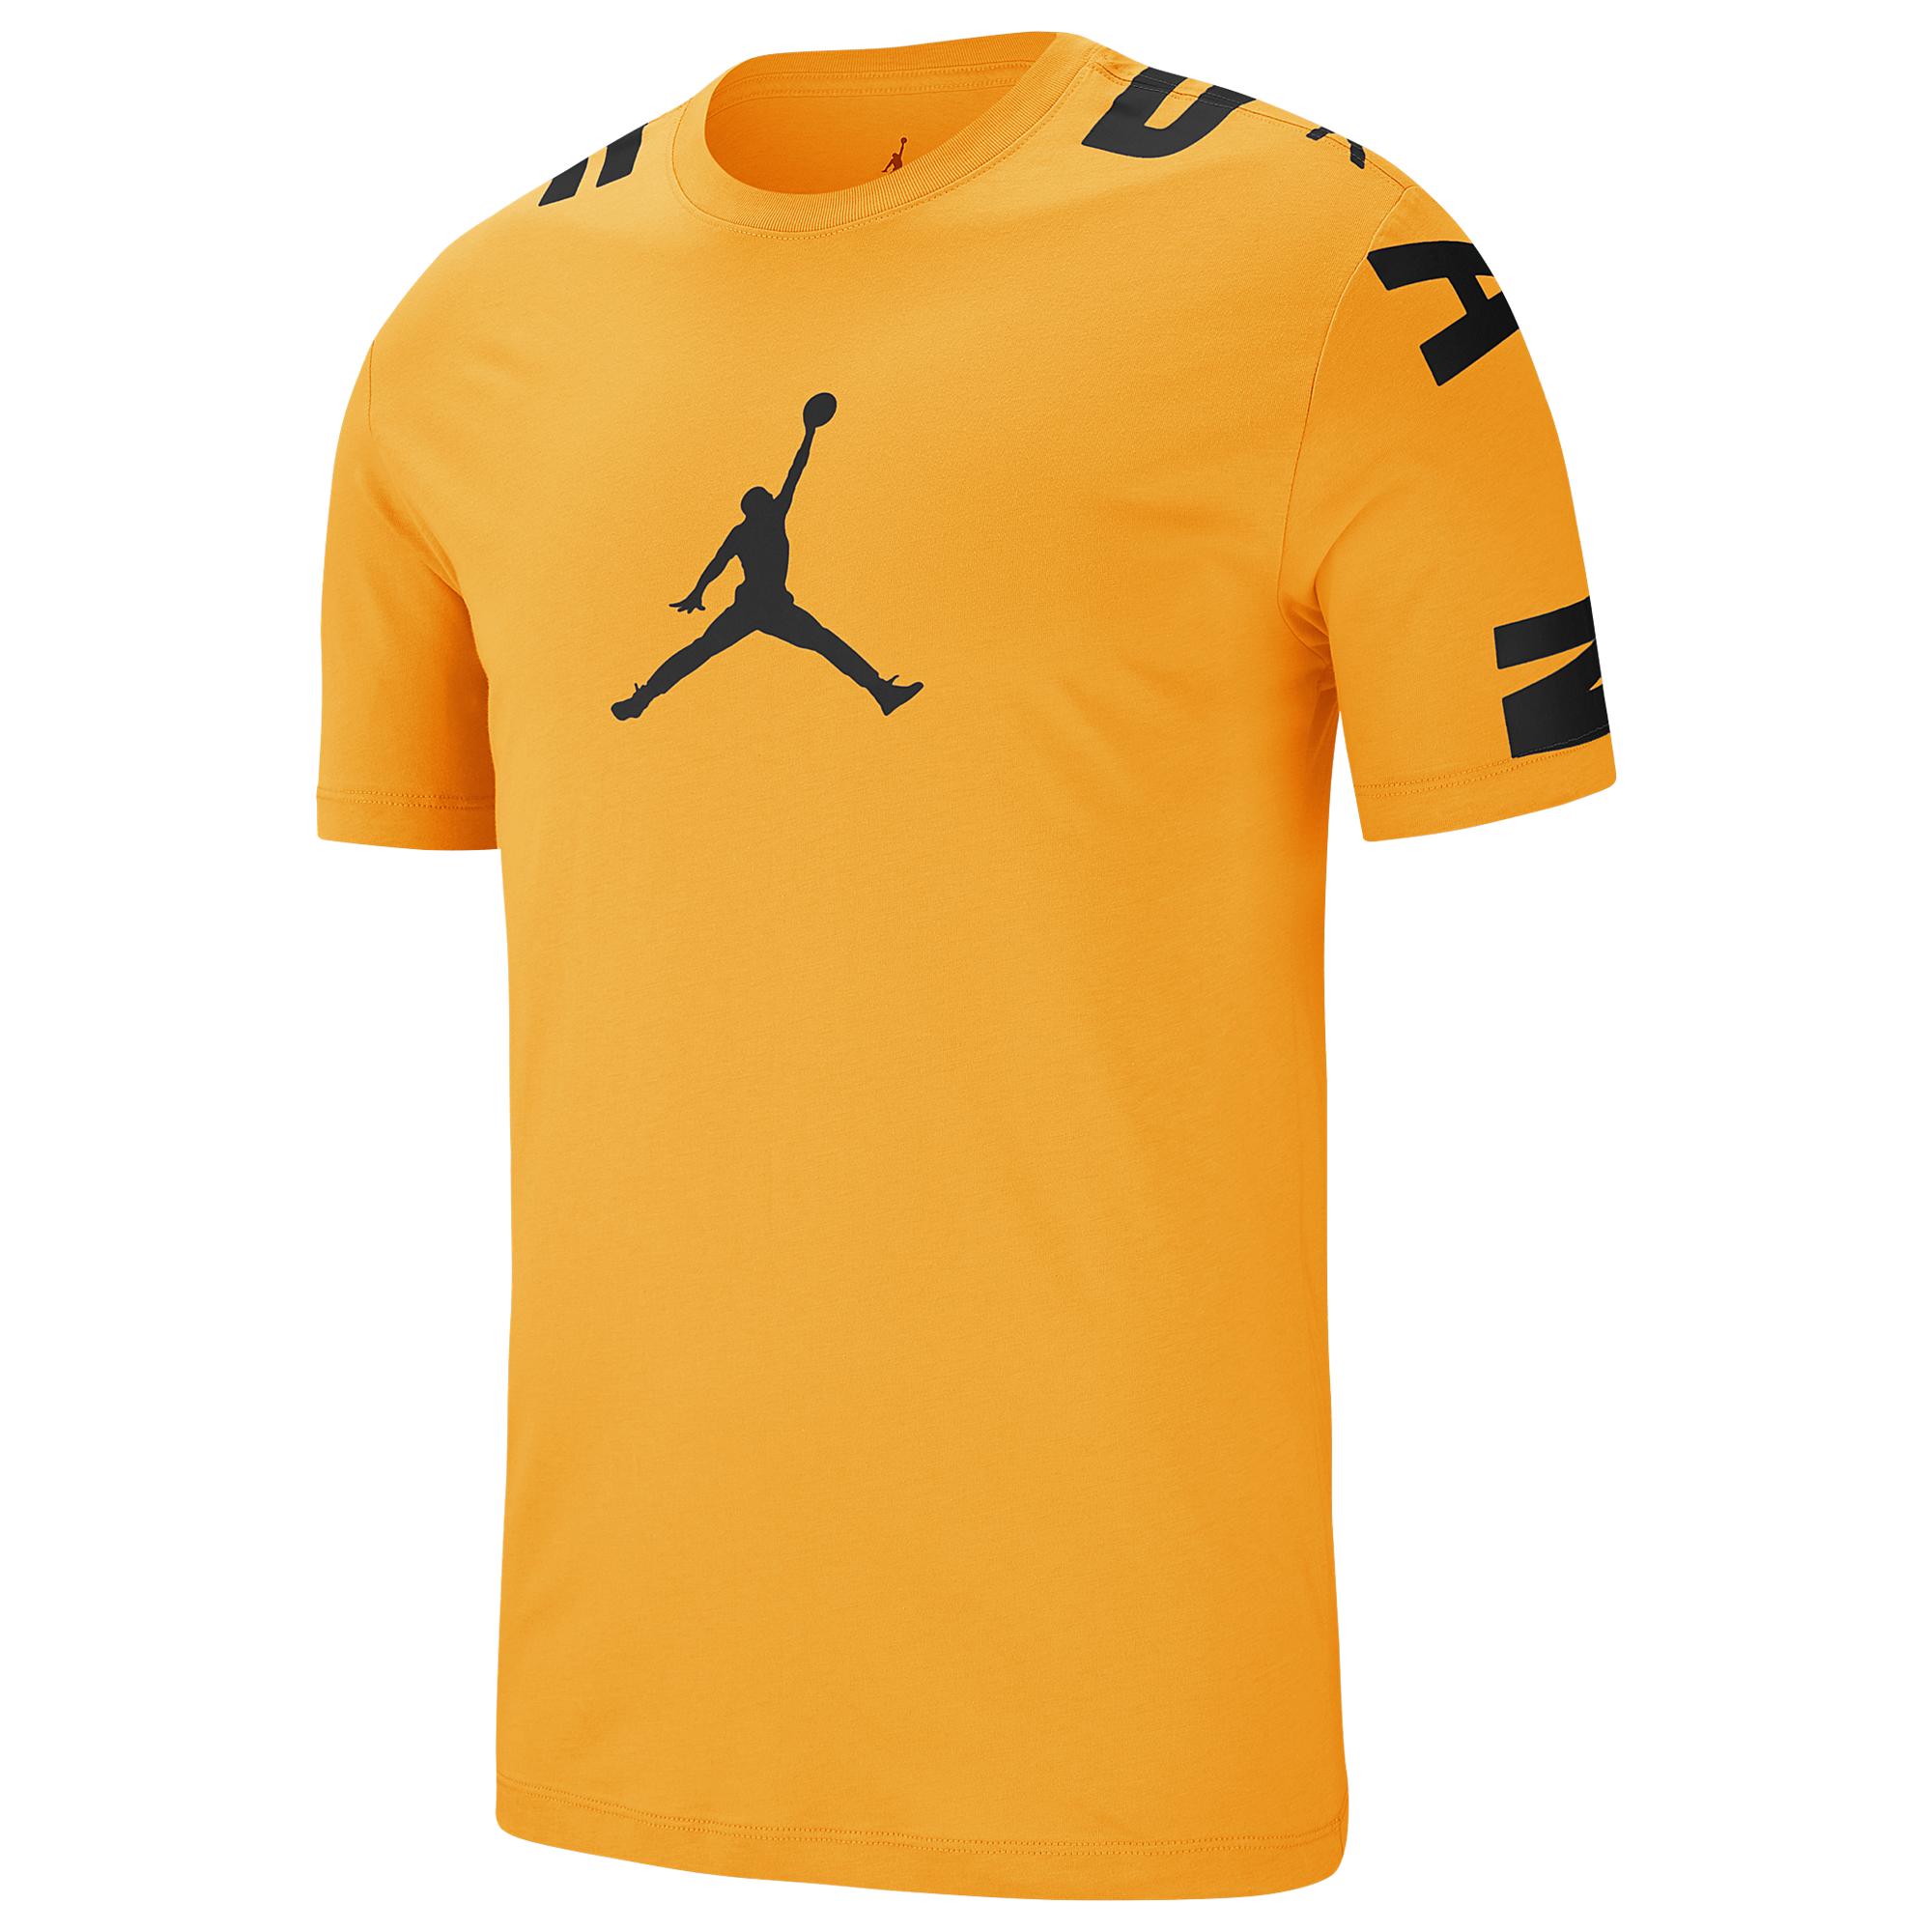 yellow jordan shirt